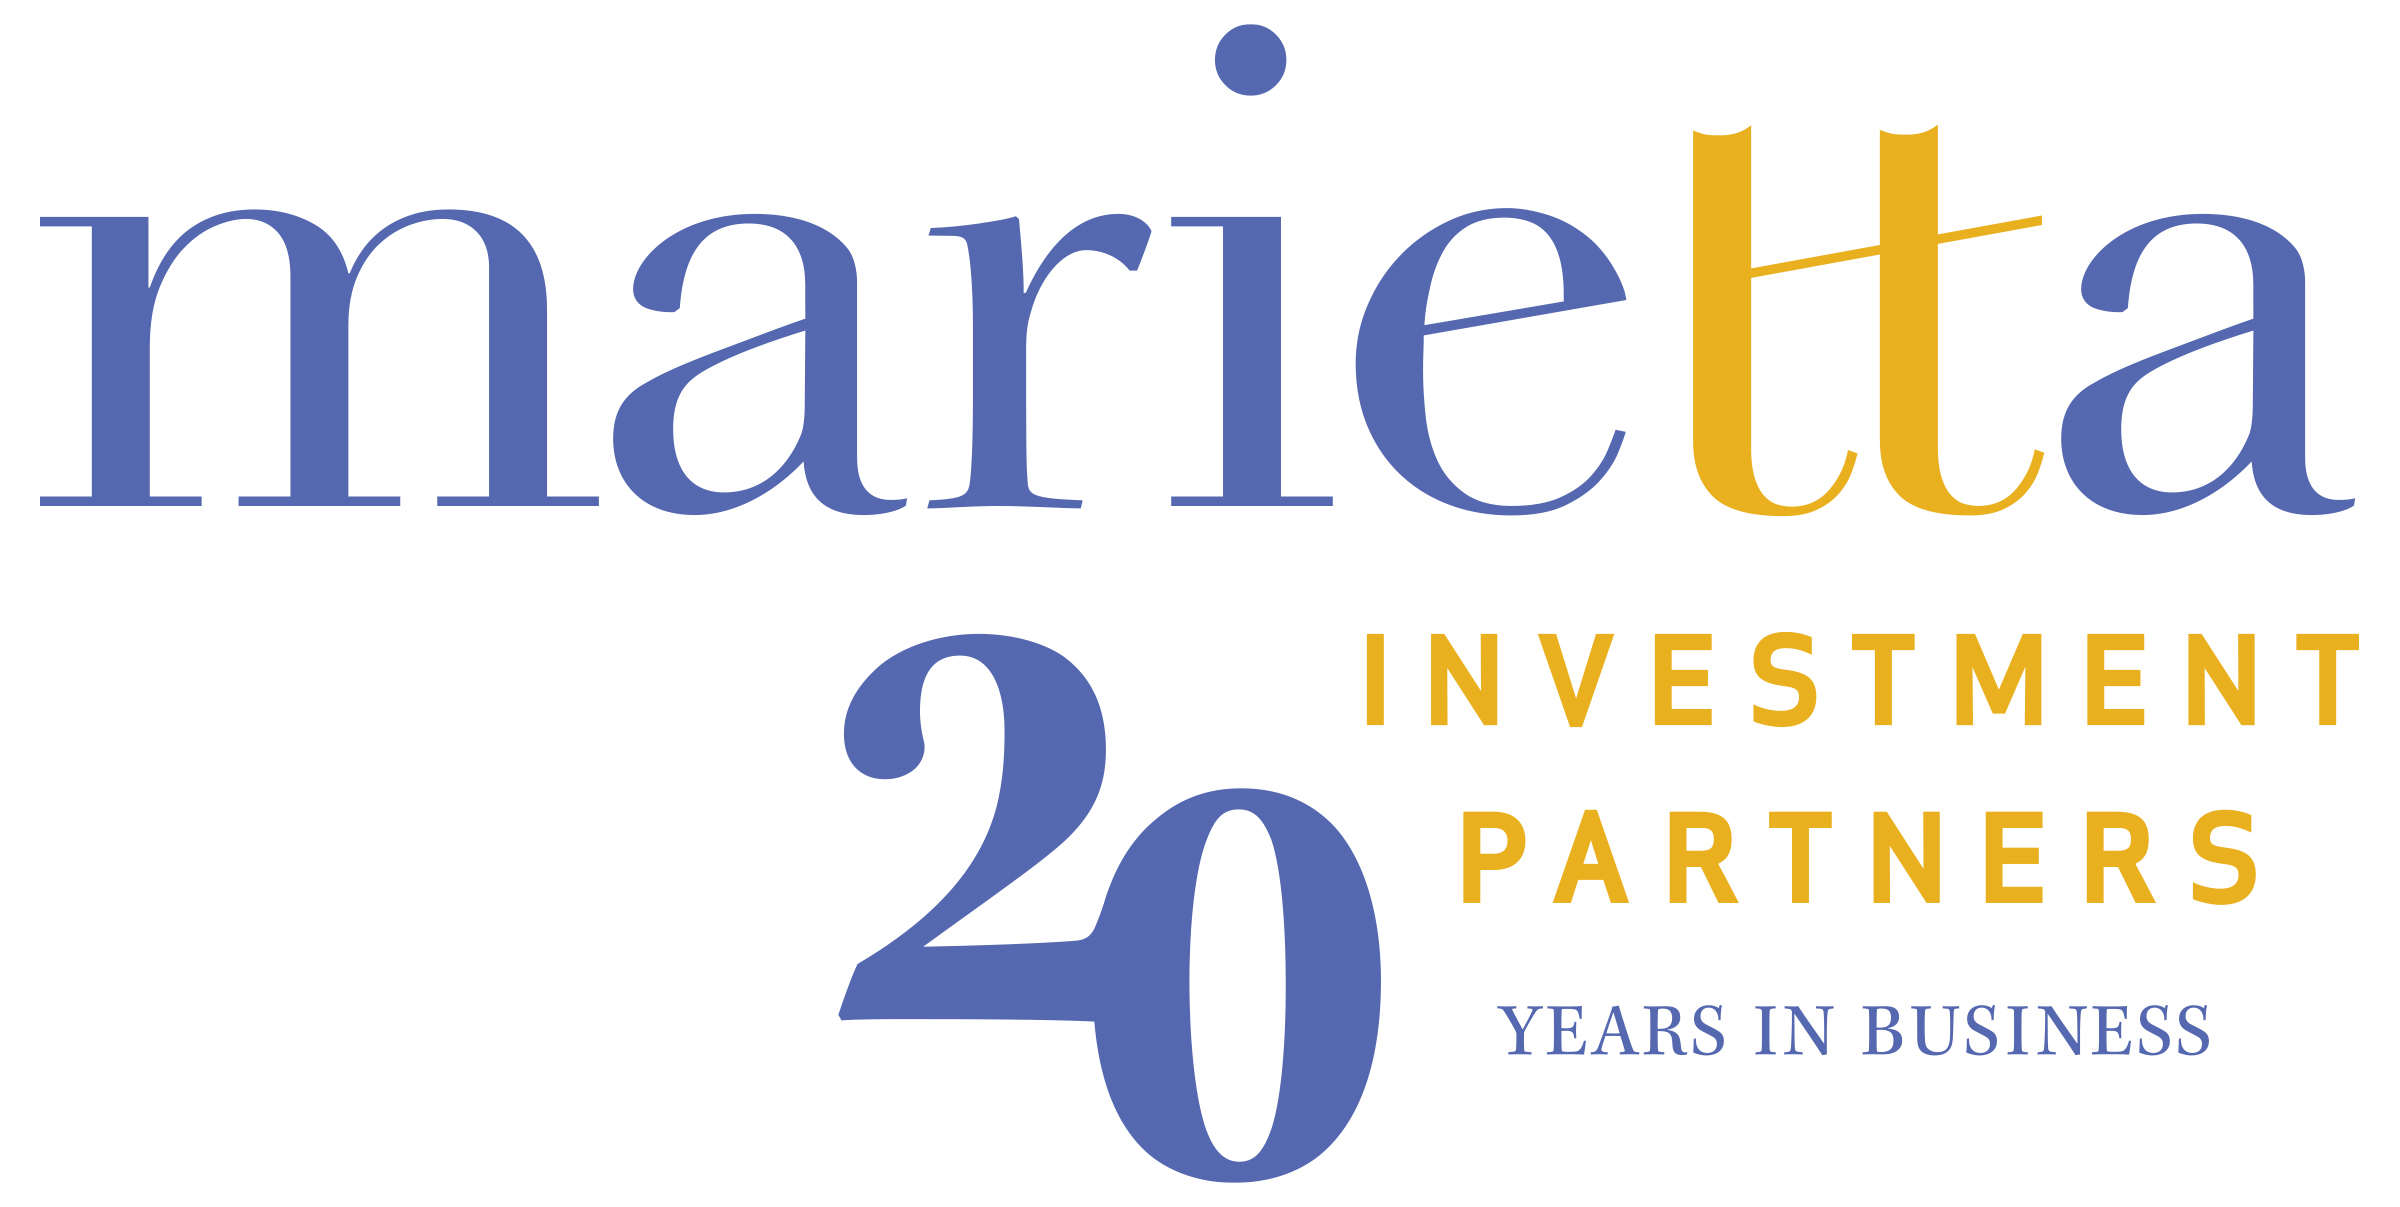 Marietta Investment Partners